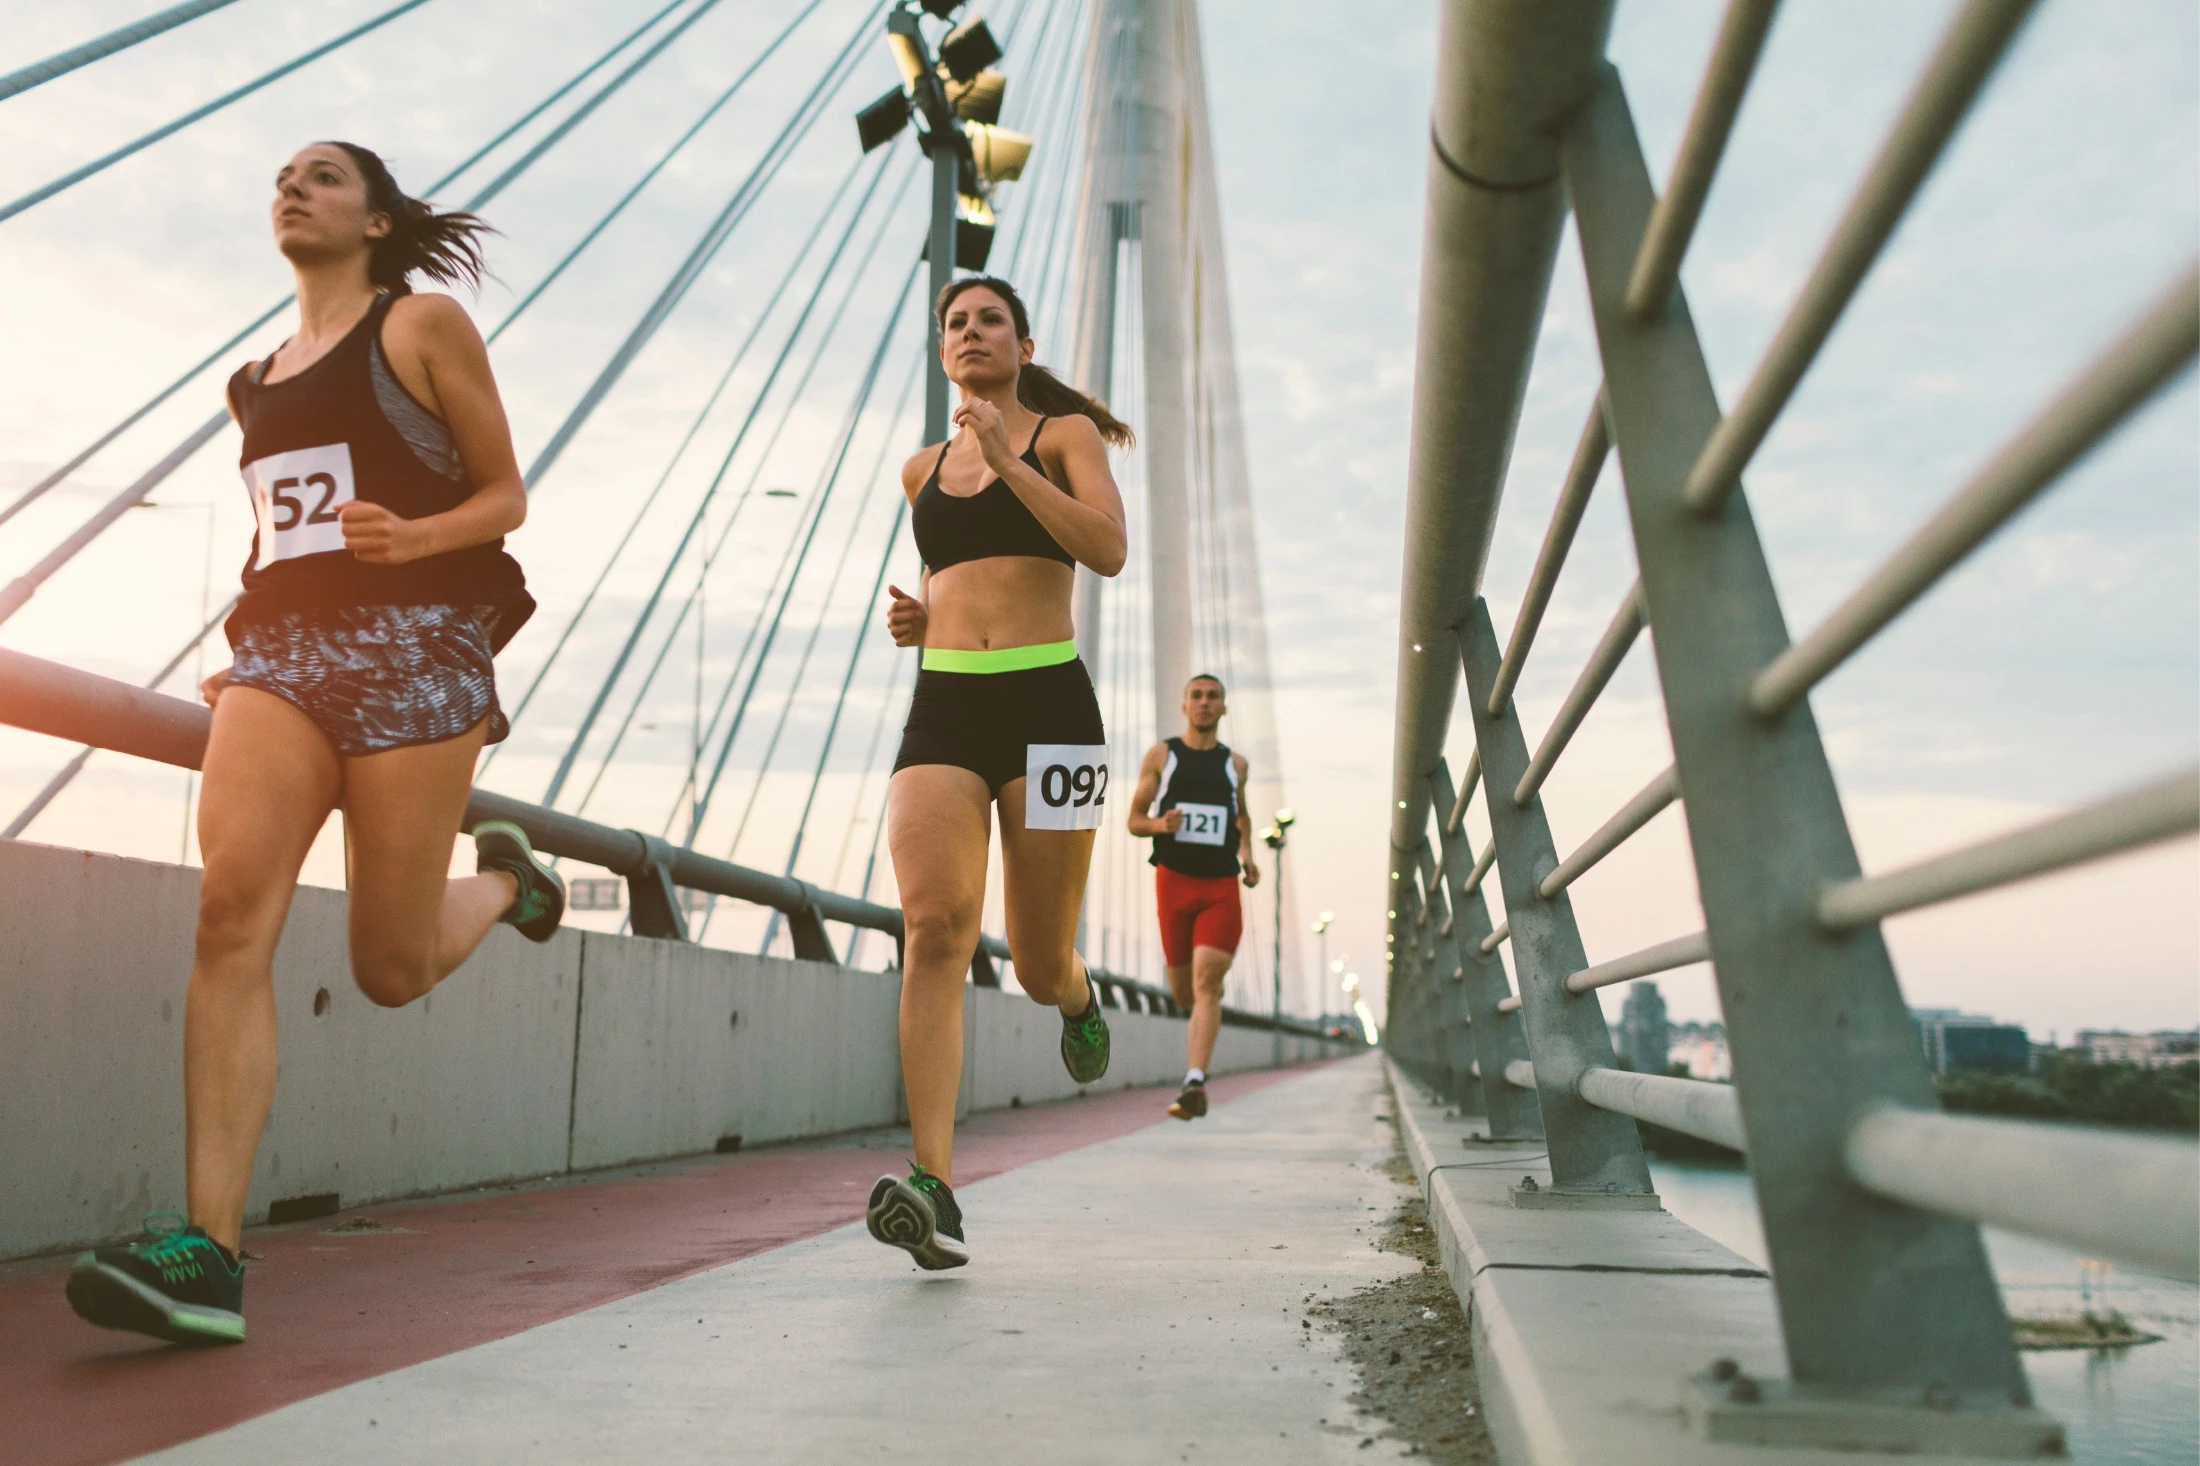 People running a marathon across a bridge.